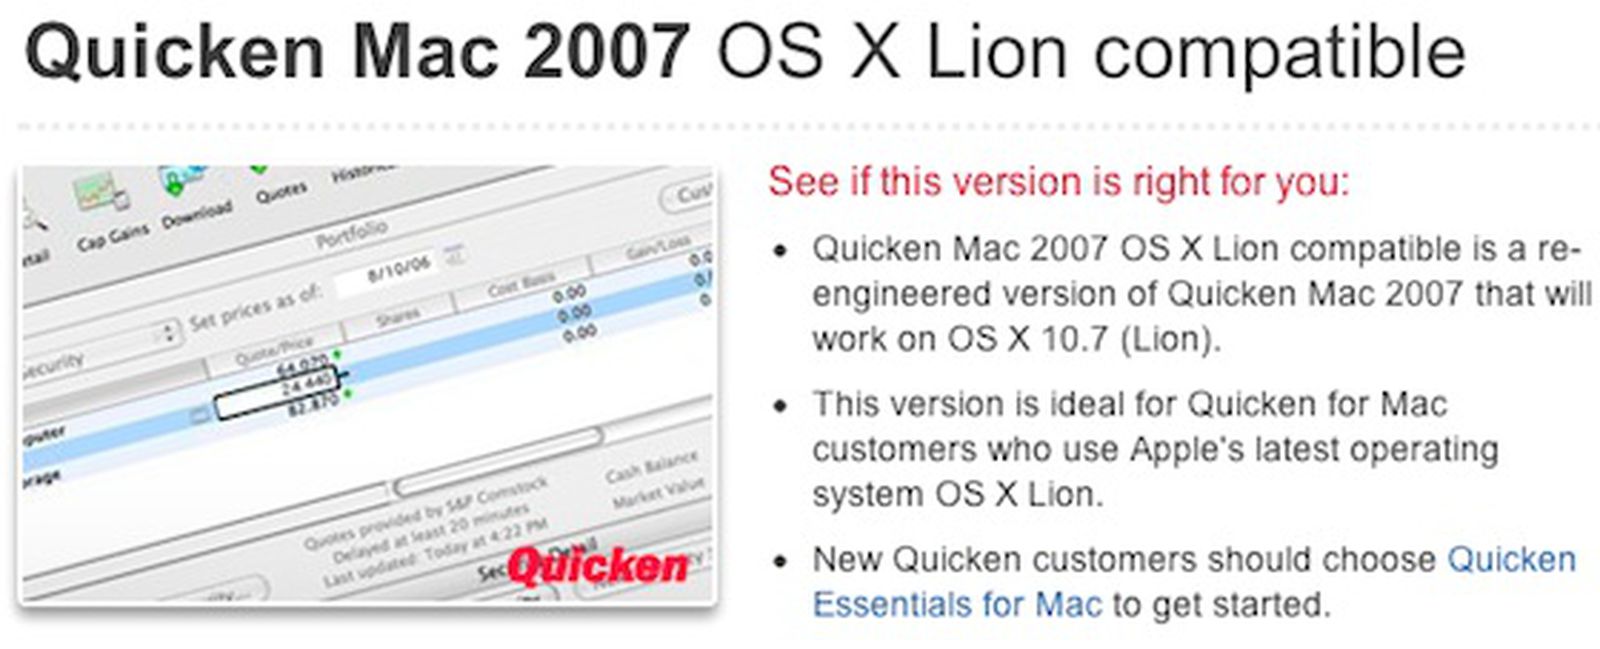 lion compatible quicken for mac 2007 update